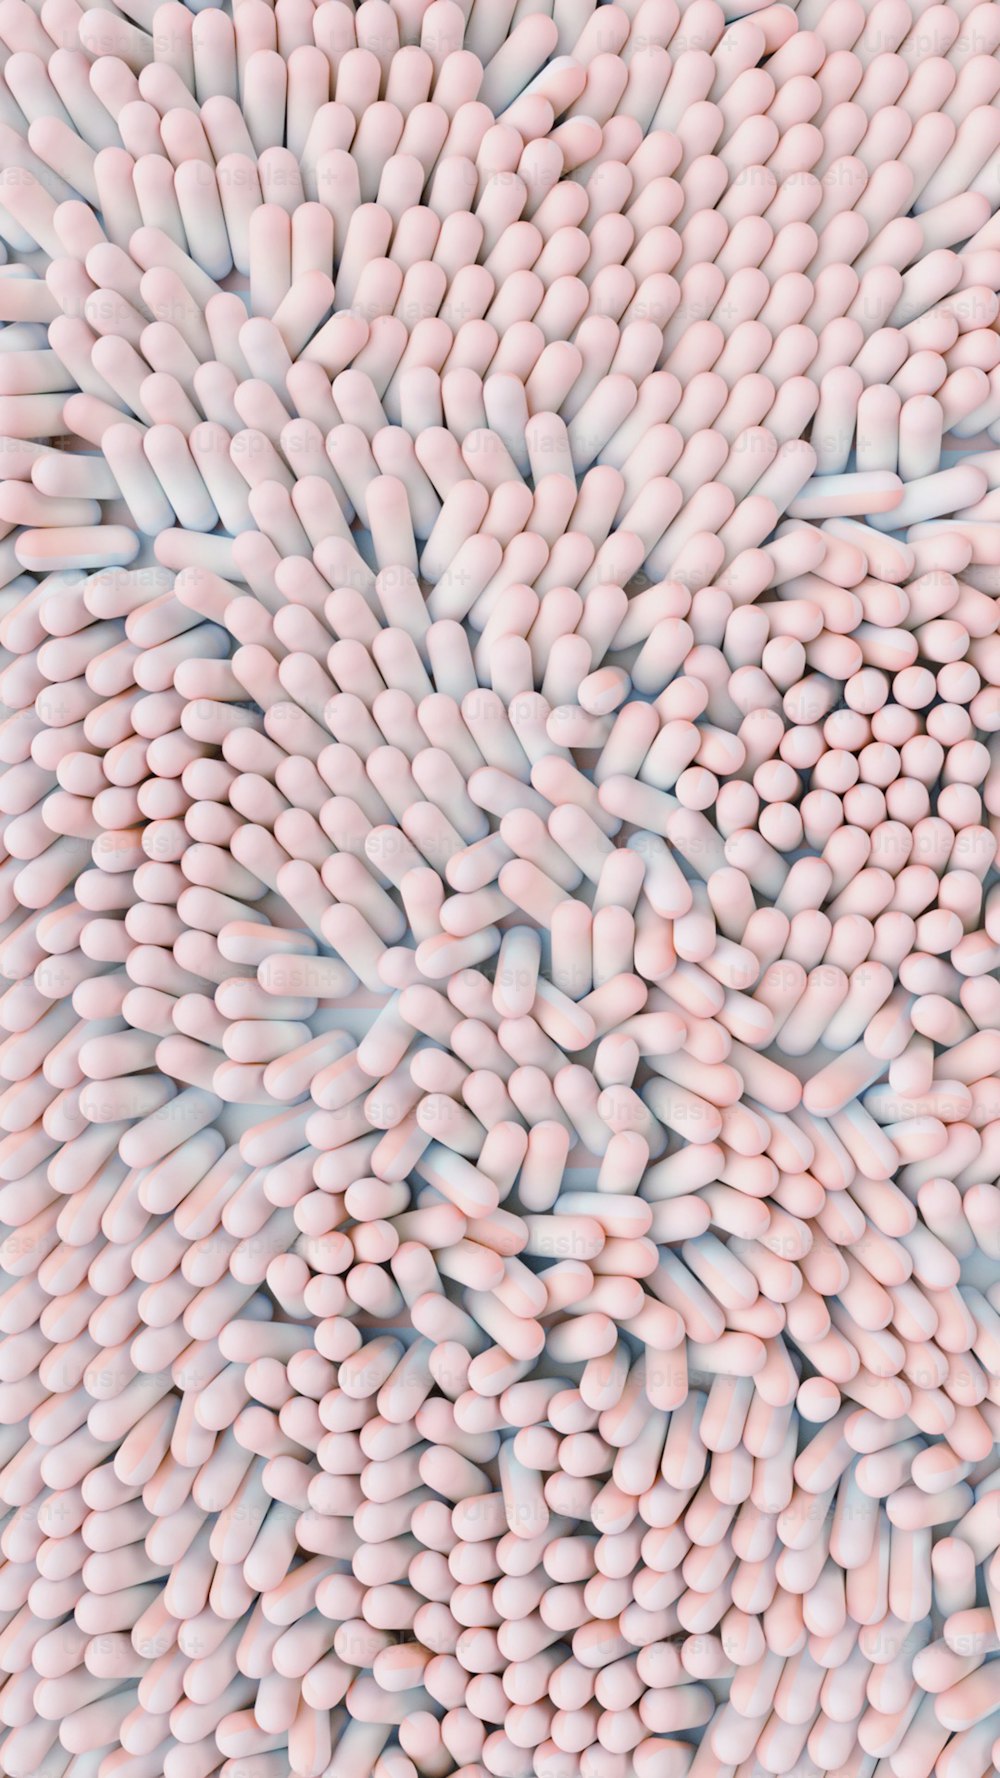 a close up of a bunch of pills